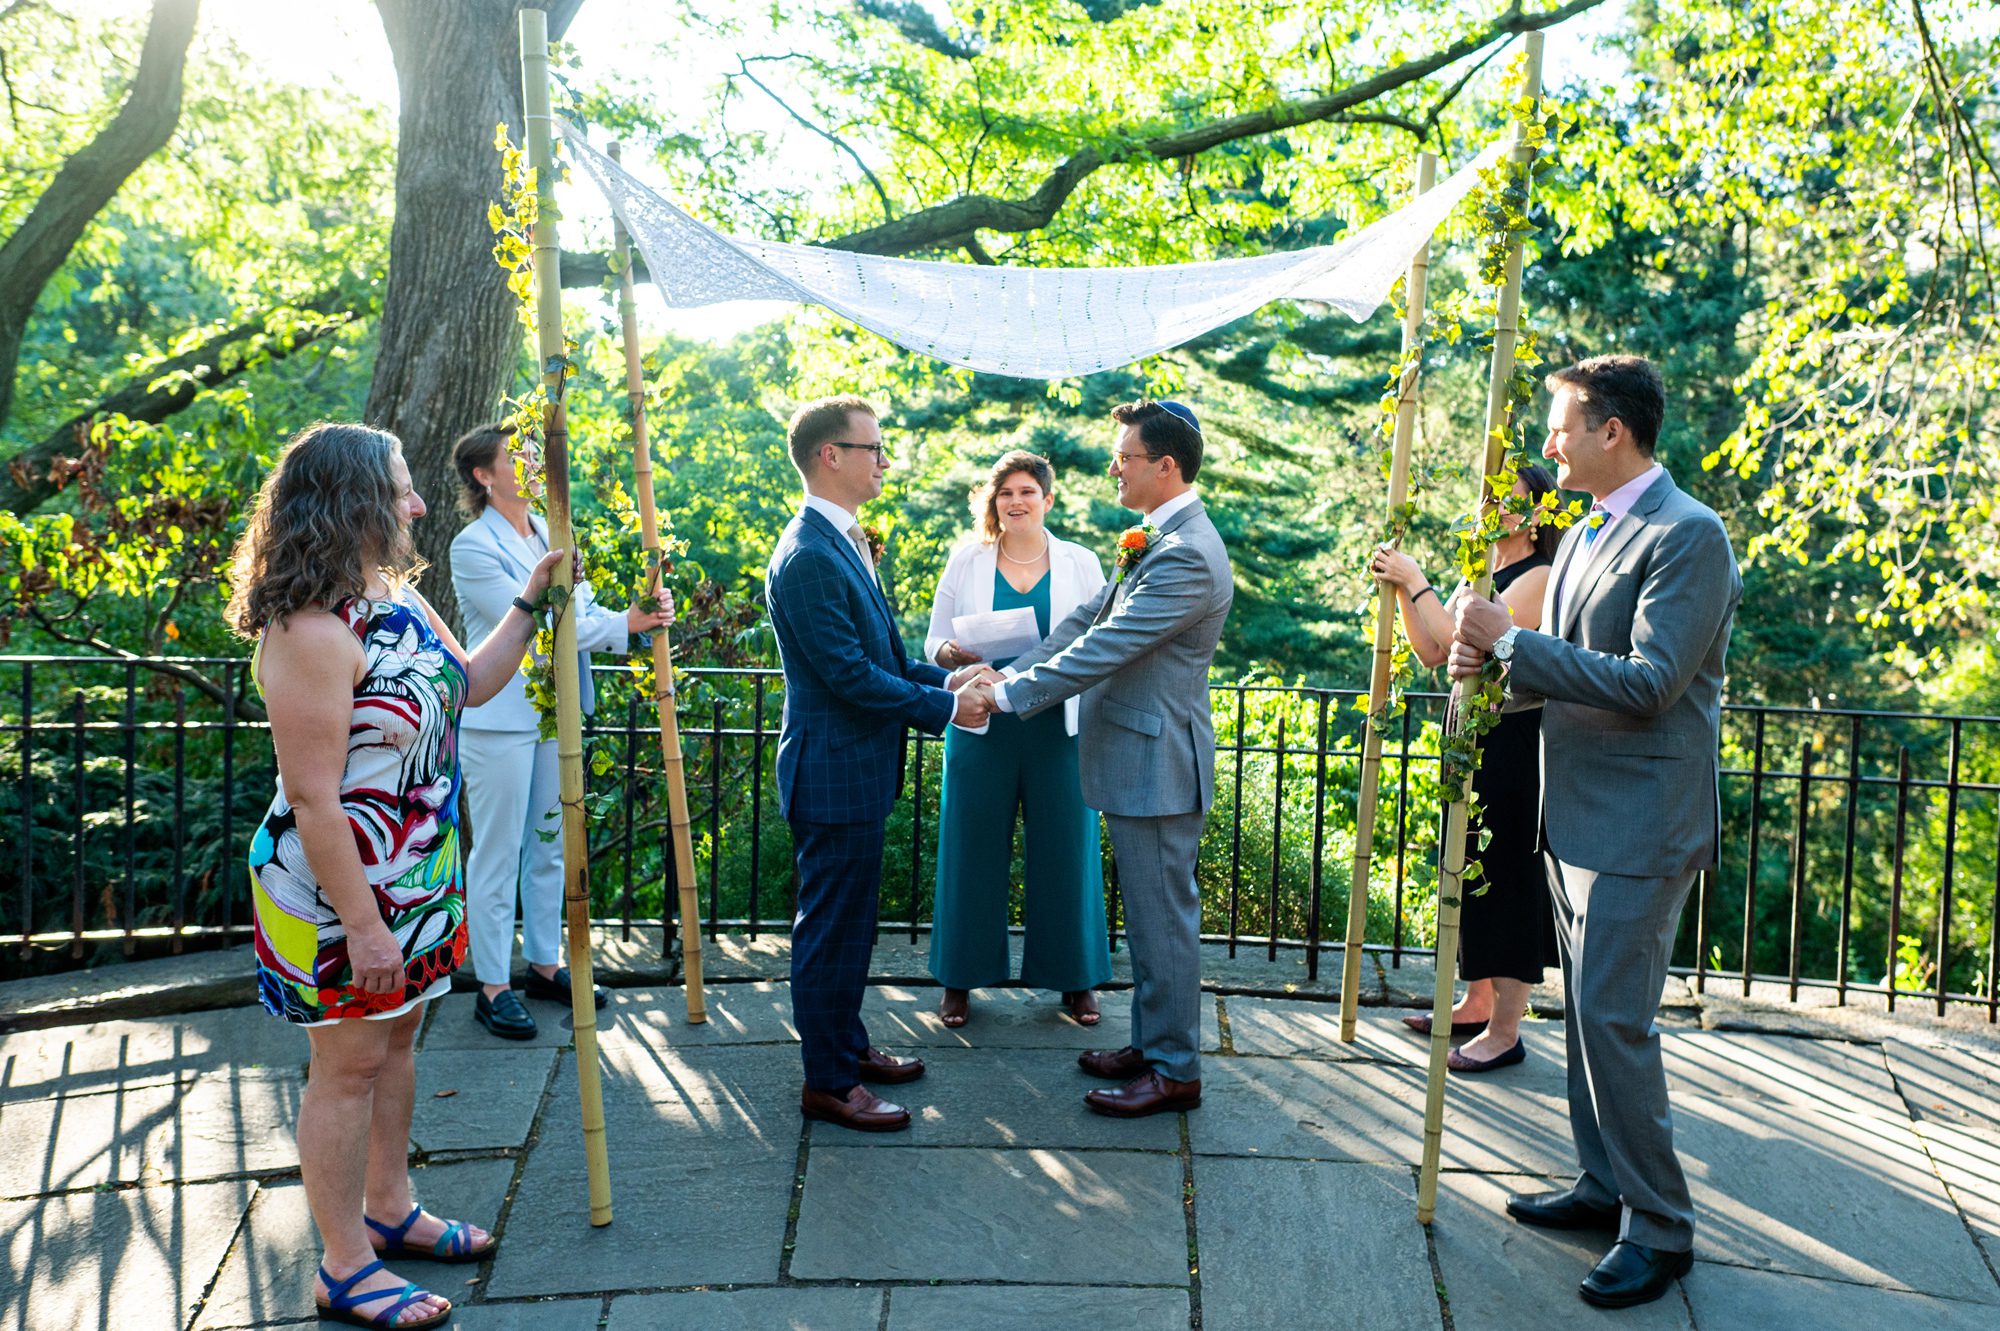 Jewish Wedding Locations in Central Park 